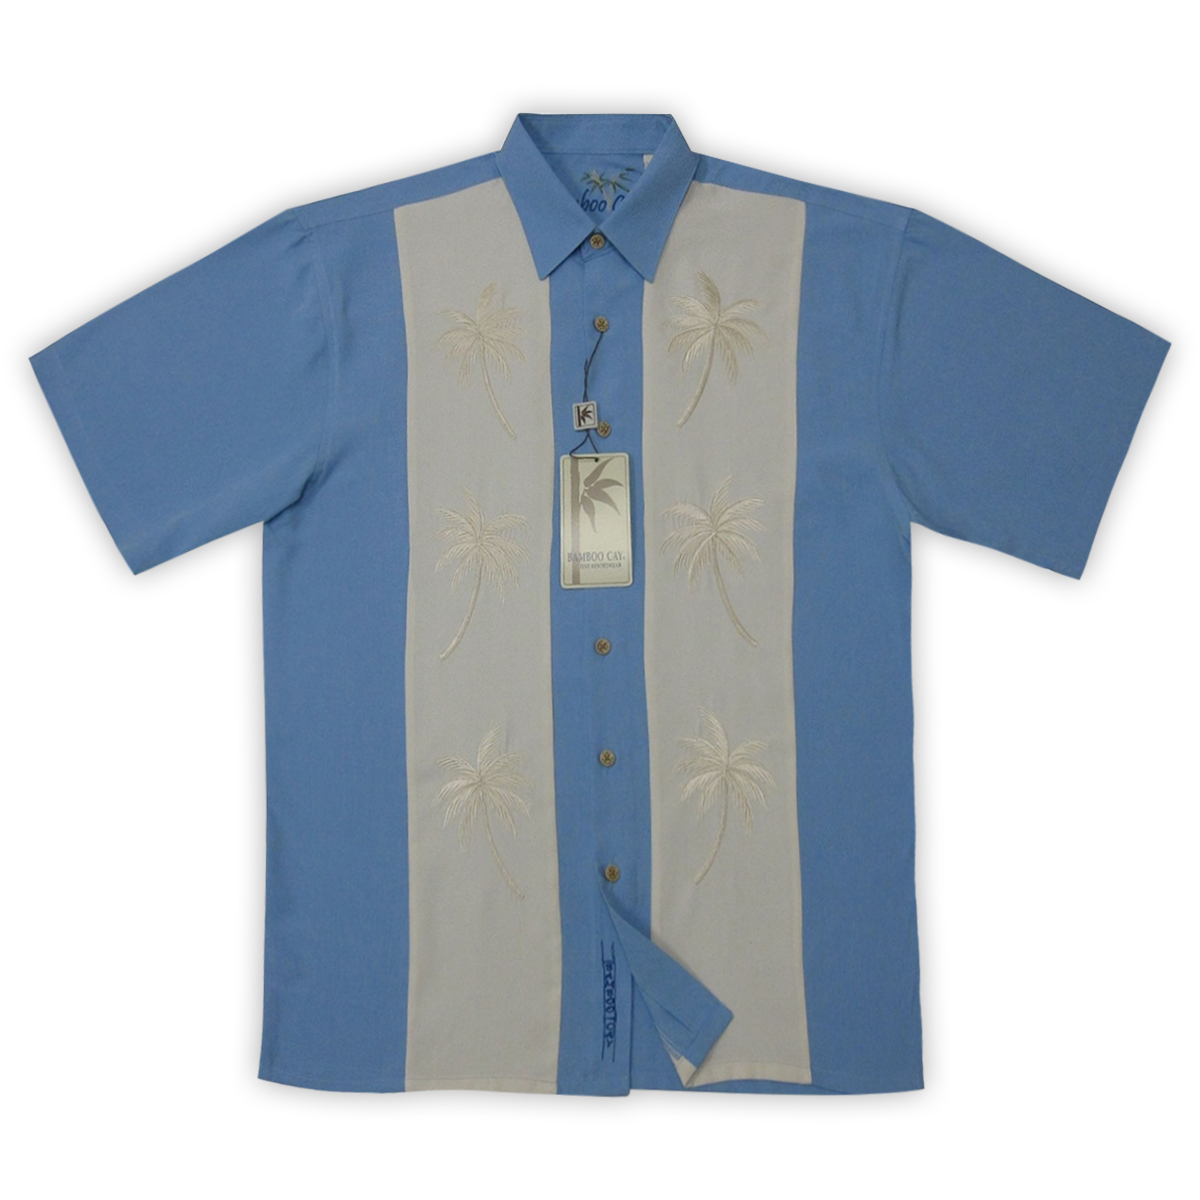 Bamboo-Cay-Men’s-Shirt-Pacific-Palms-Electro-Sky-Blue-&-Cream